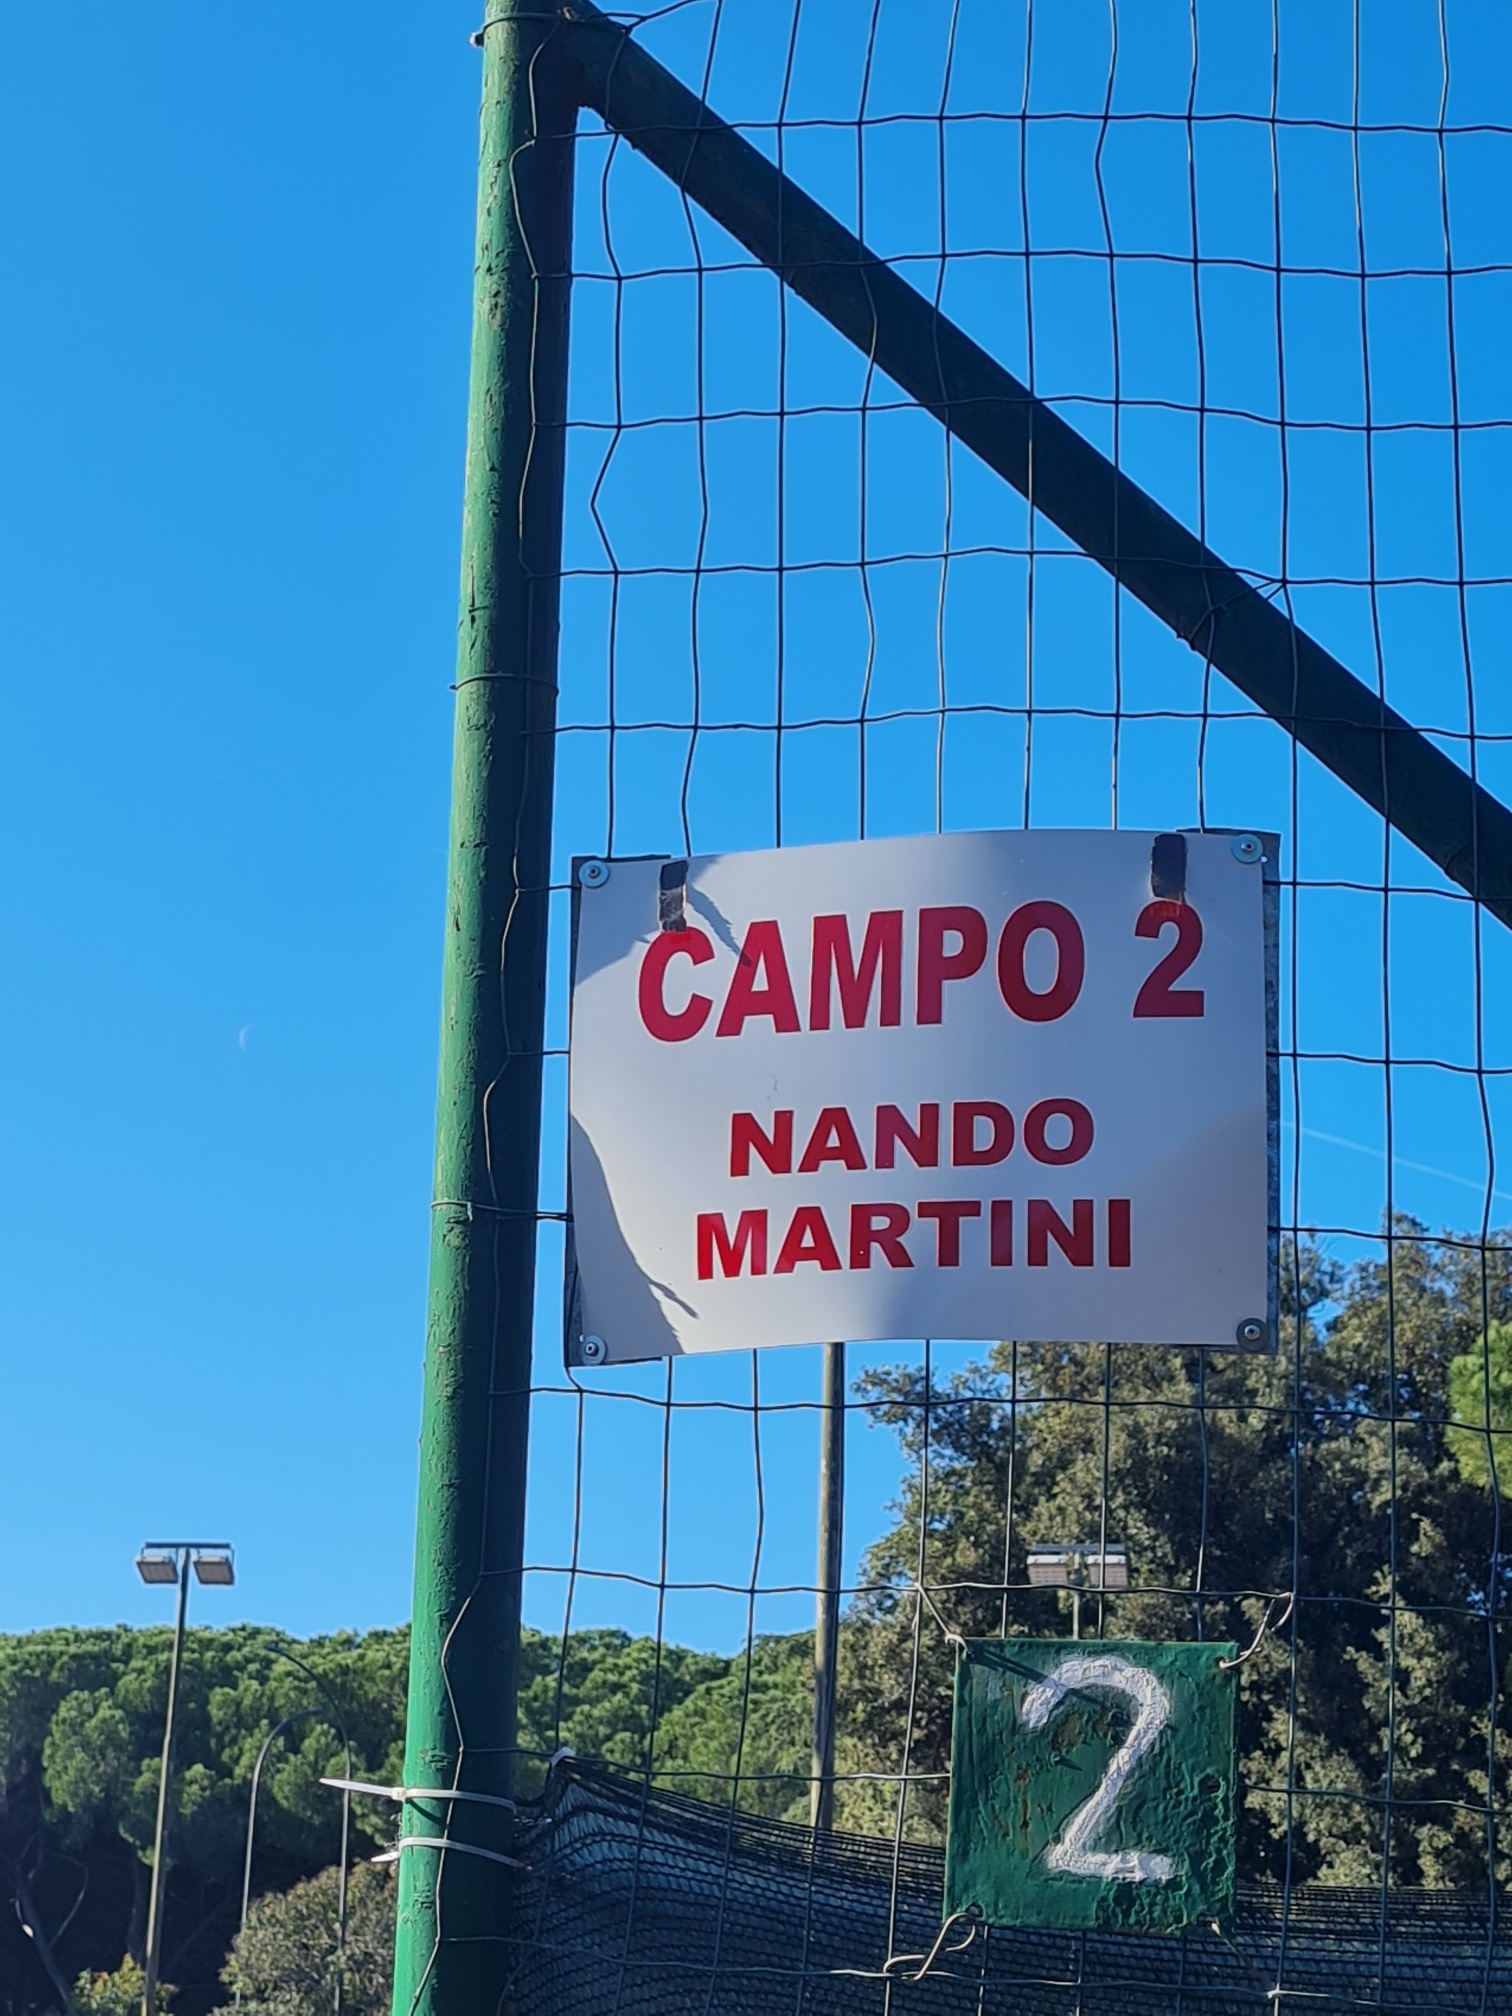 Nando-Martini-e-Sauro-Dani-tennis-grosseto-4